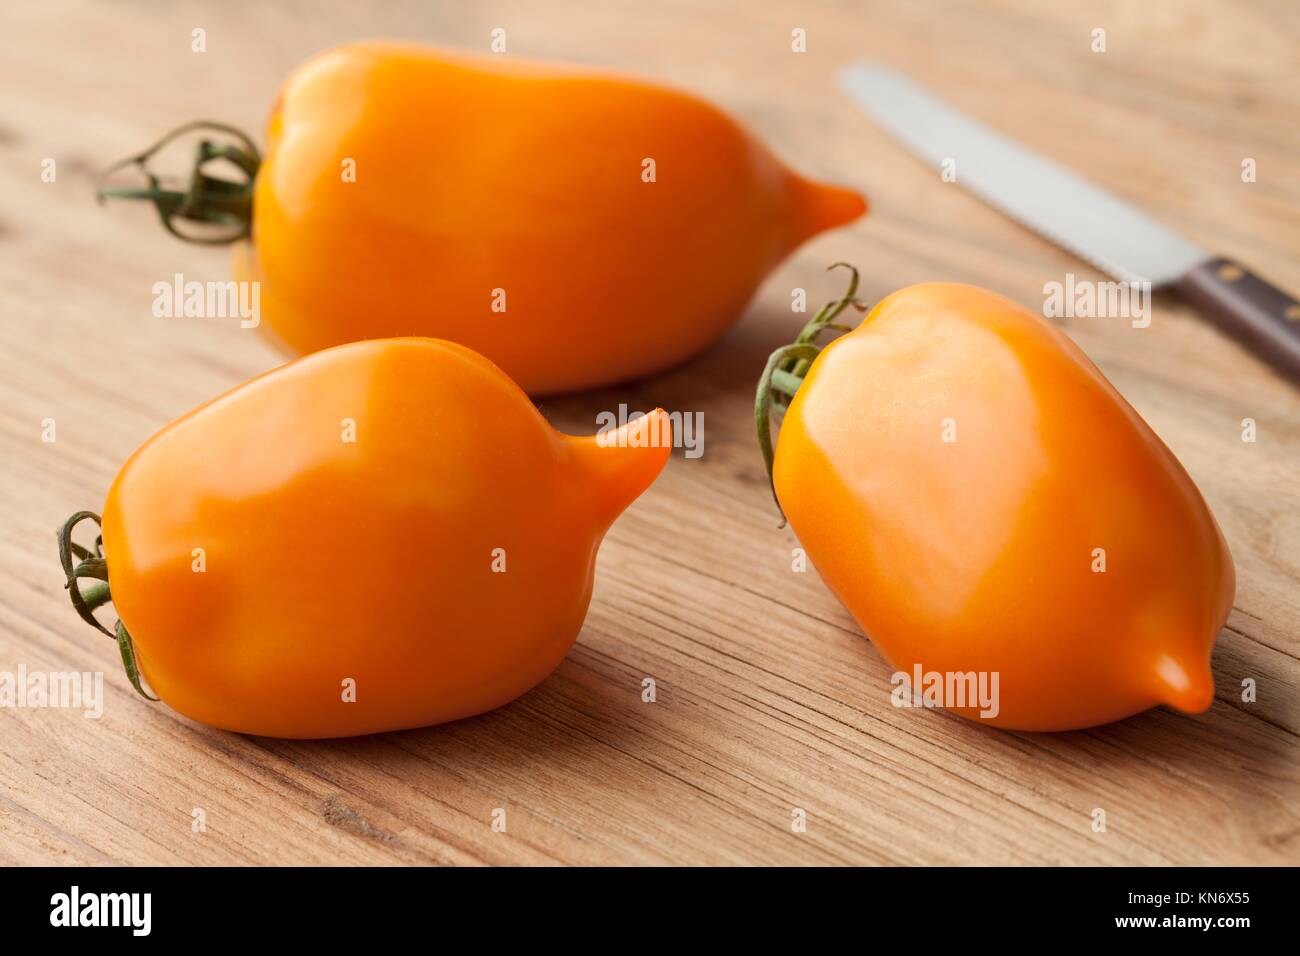 Whole and half fresh orange pepper- tomatoes. Stock Photo